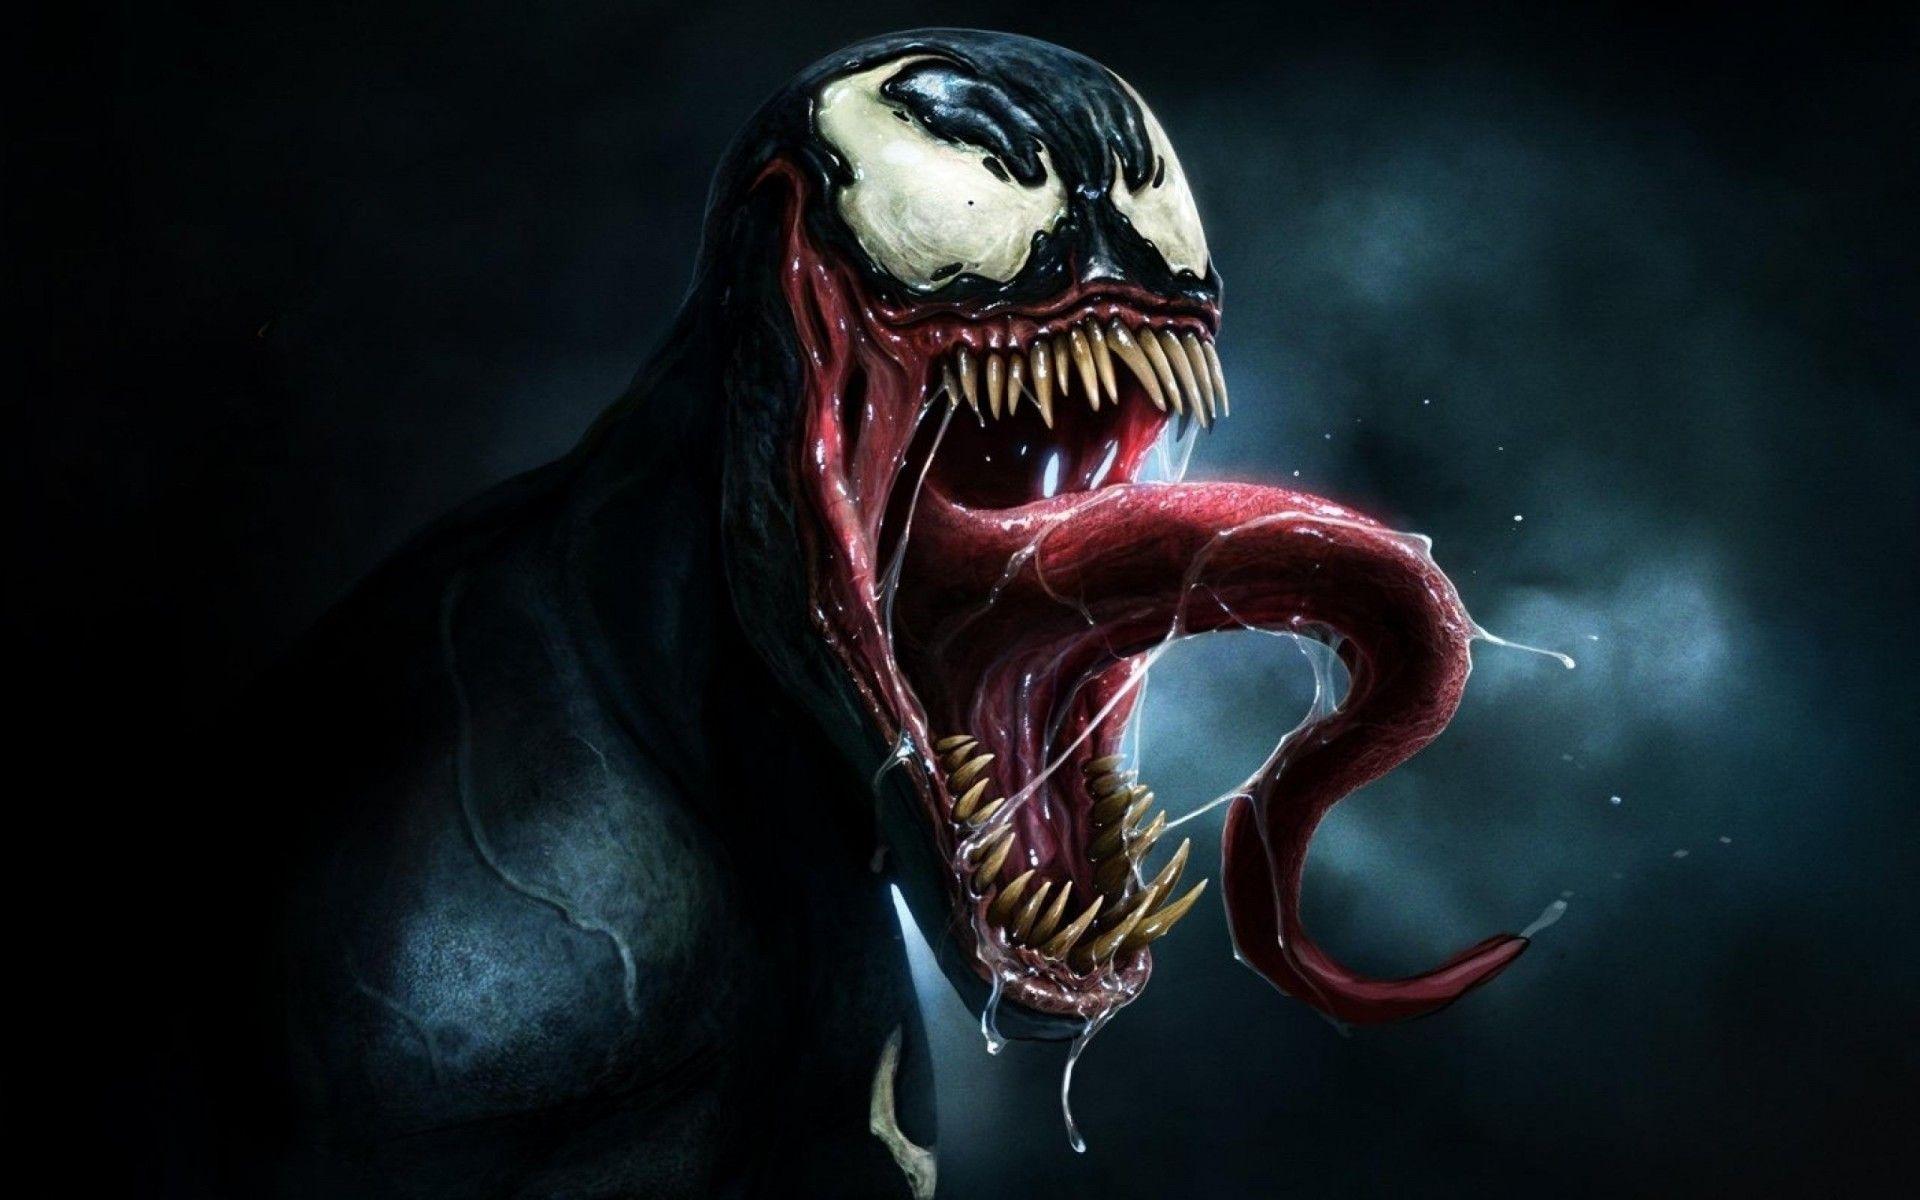 Venom HD Wallpaper for desktop download